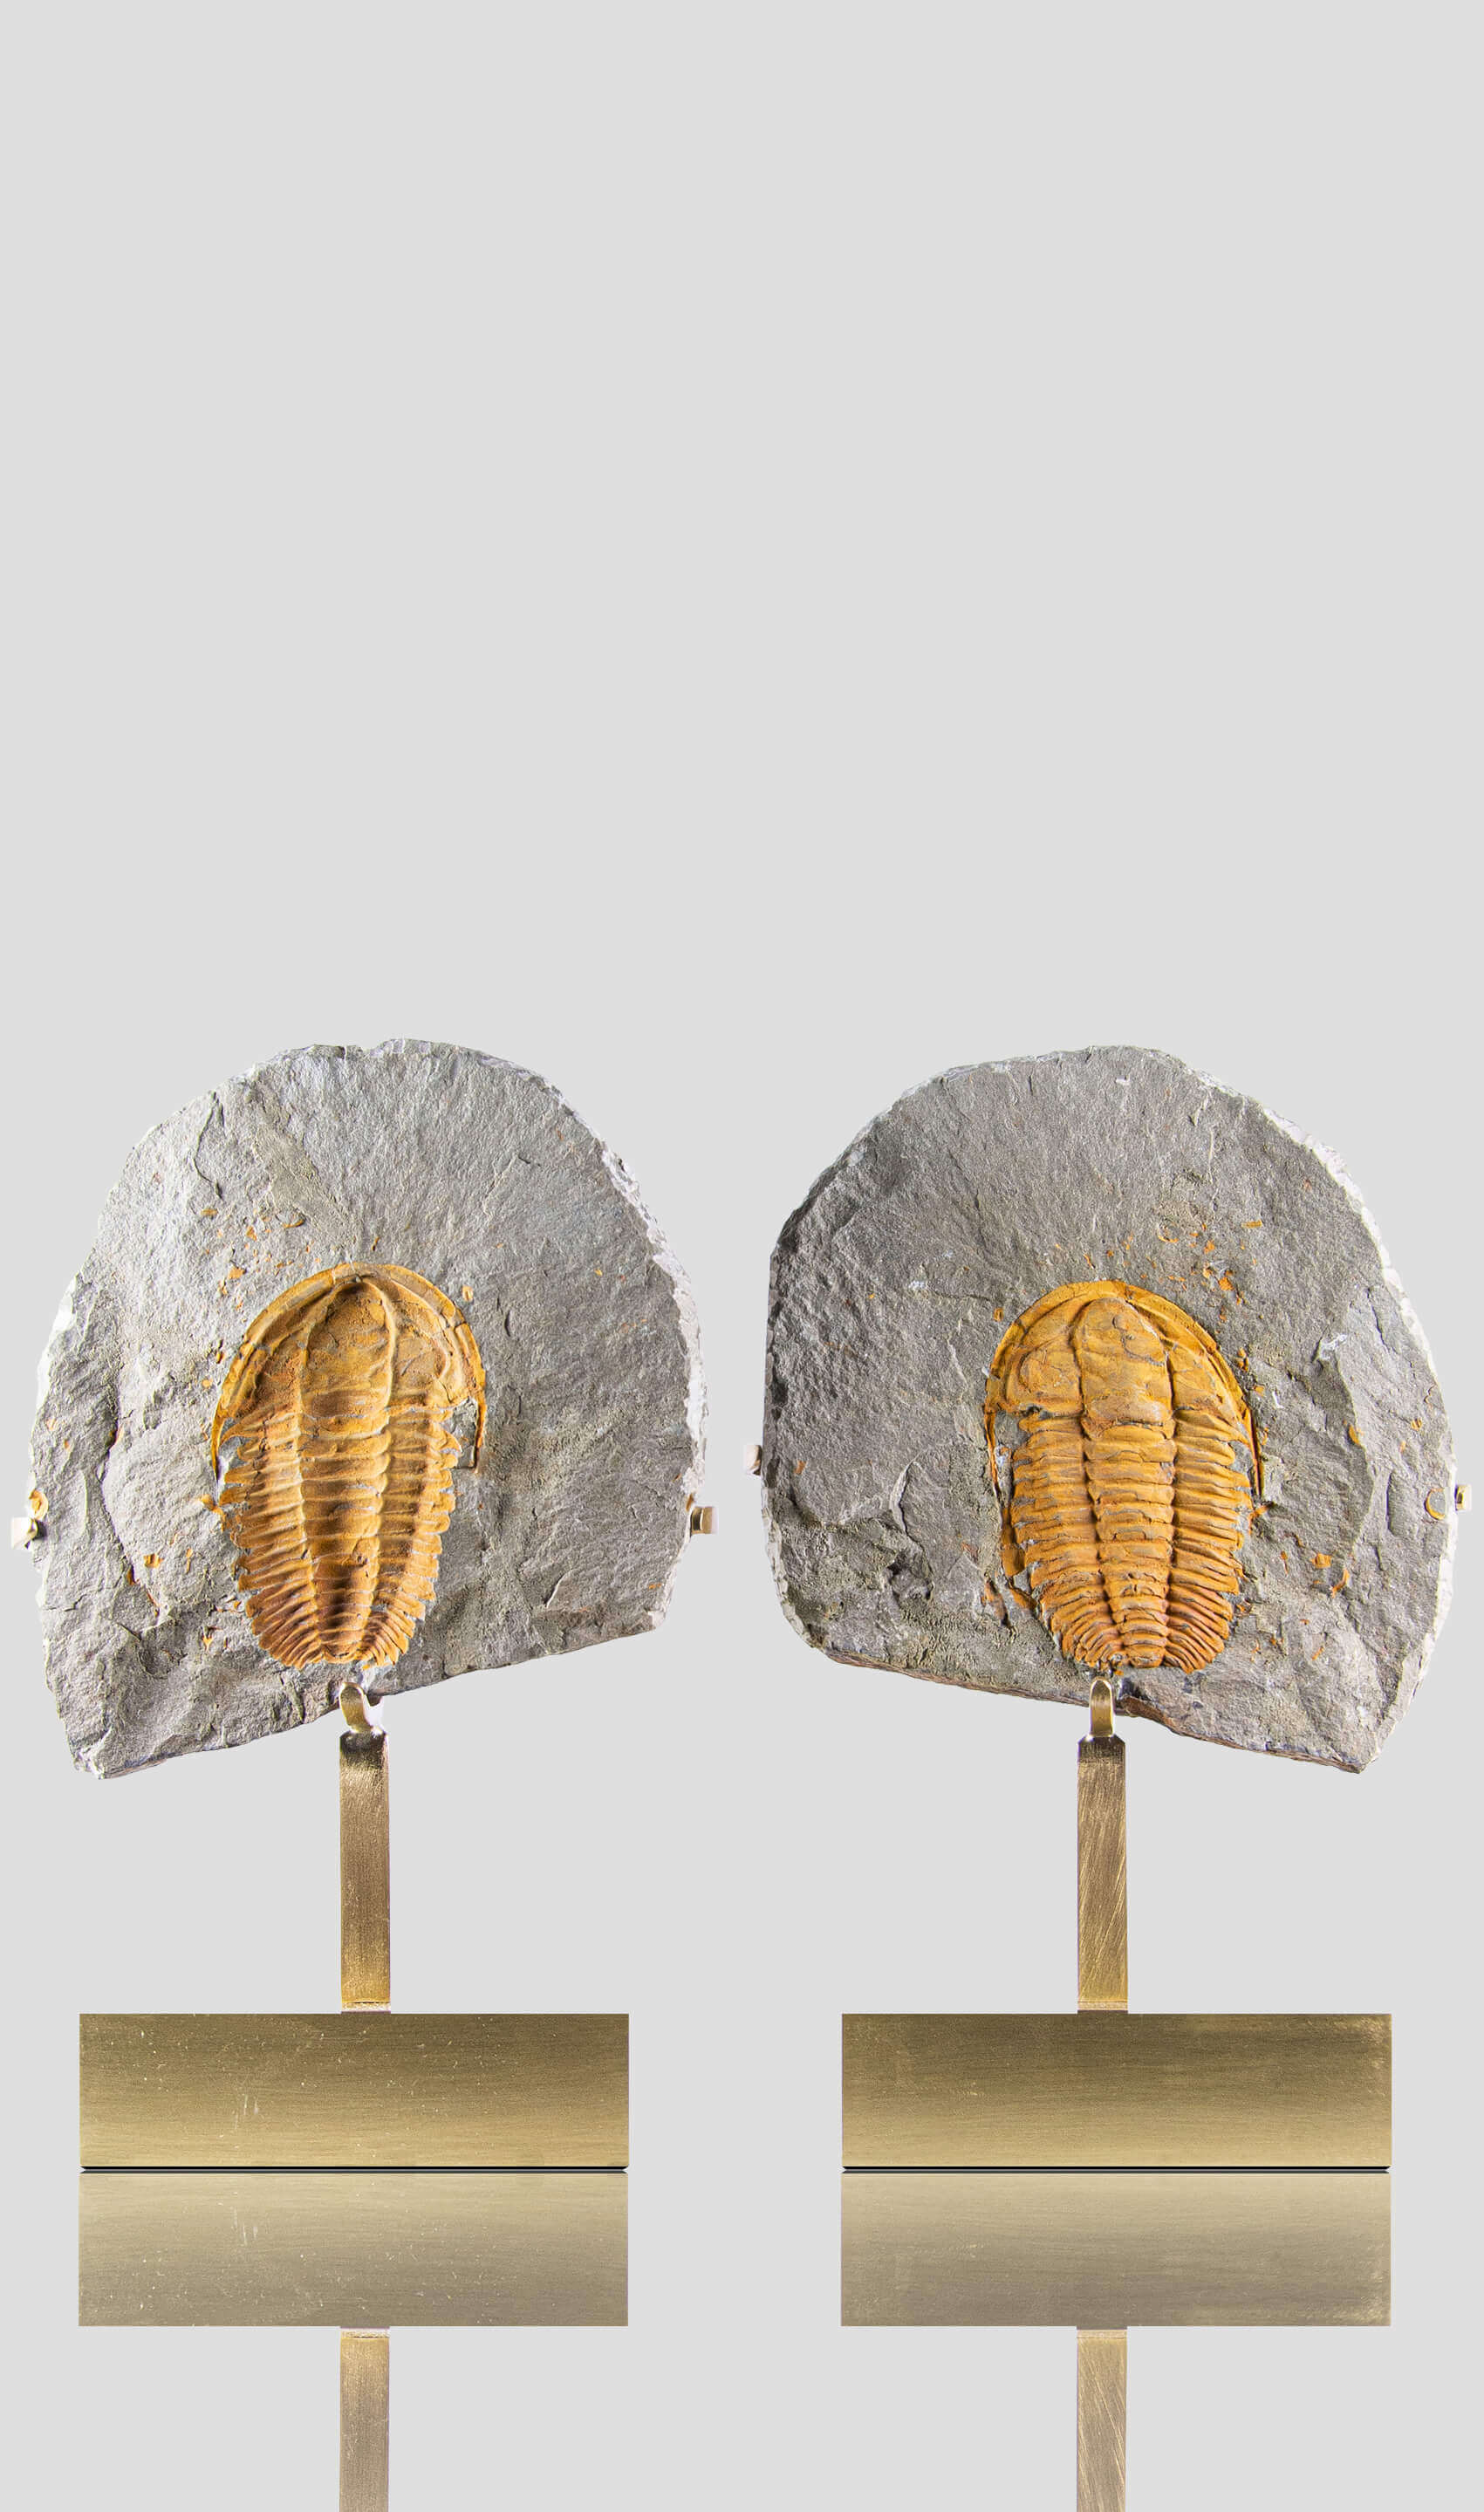 Rare fossil saukianda andalusiae trilobite for sale on brass stand 16